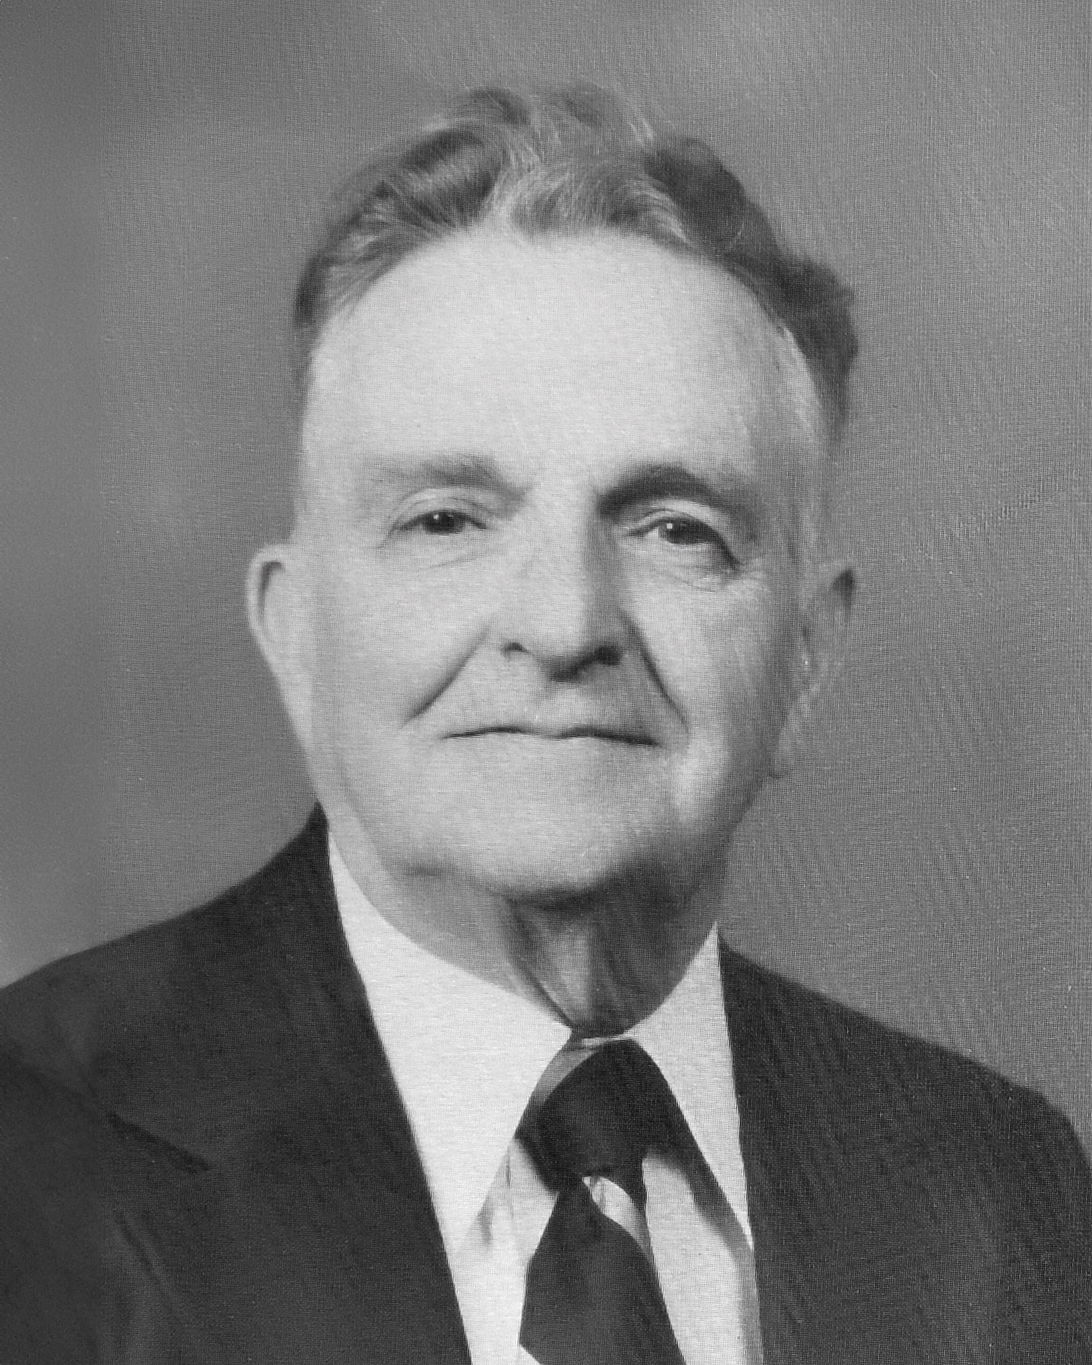 Portrait of Robert E. Bradley